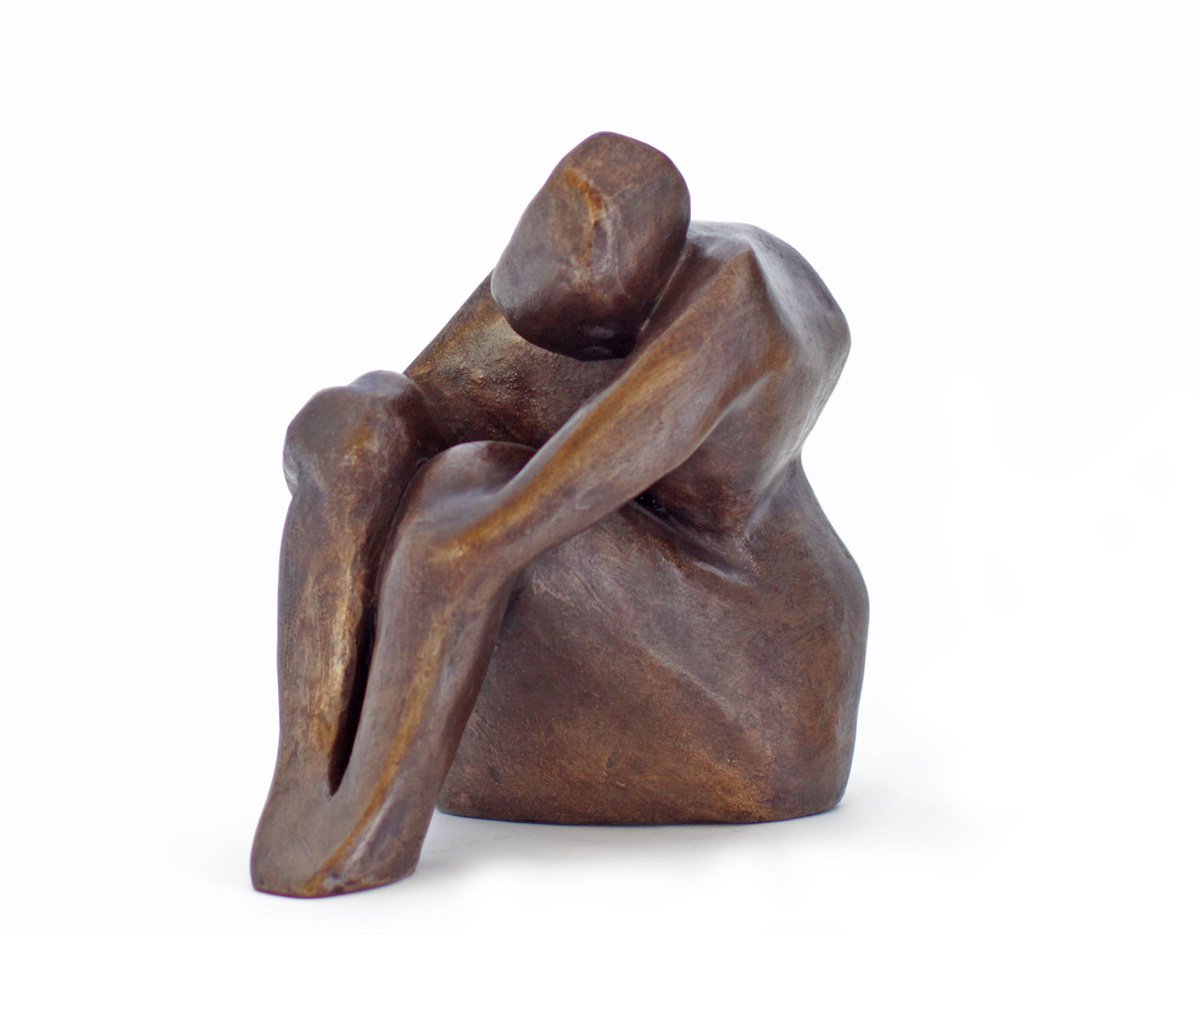 Fiona in bronze resin by Clare Dabinett